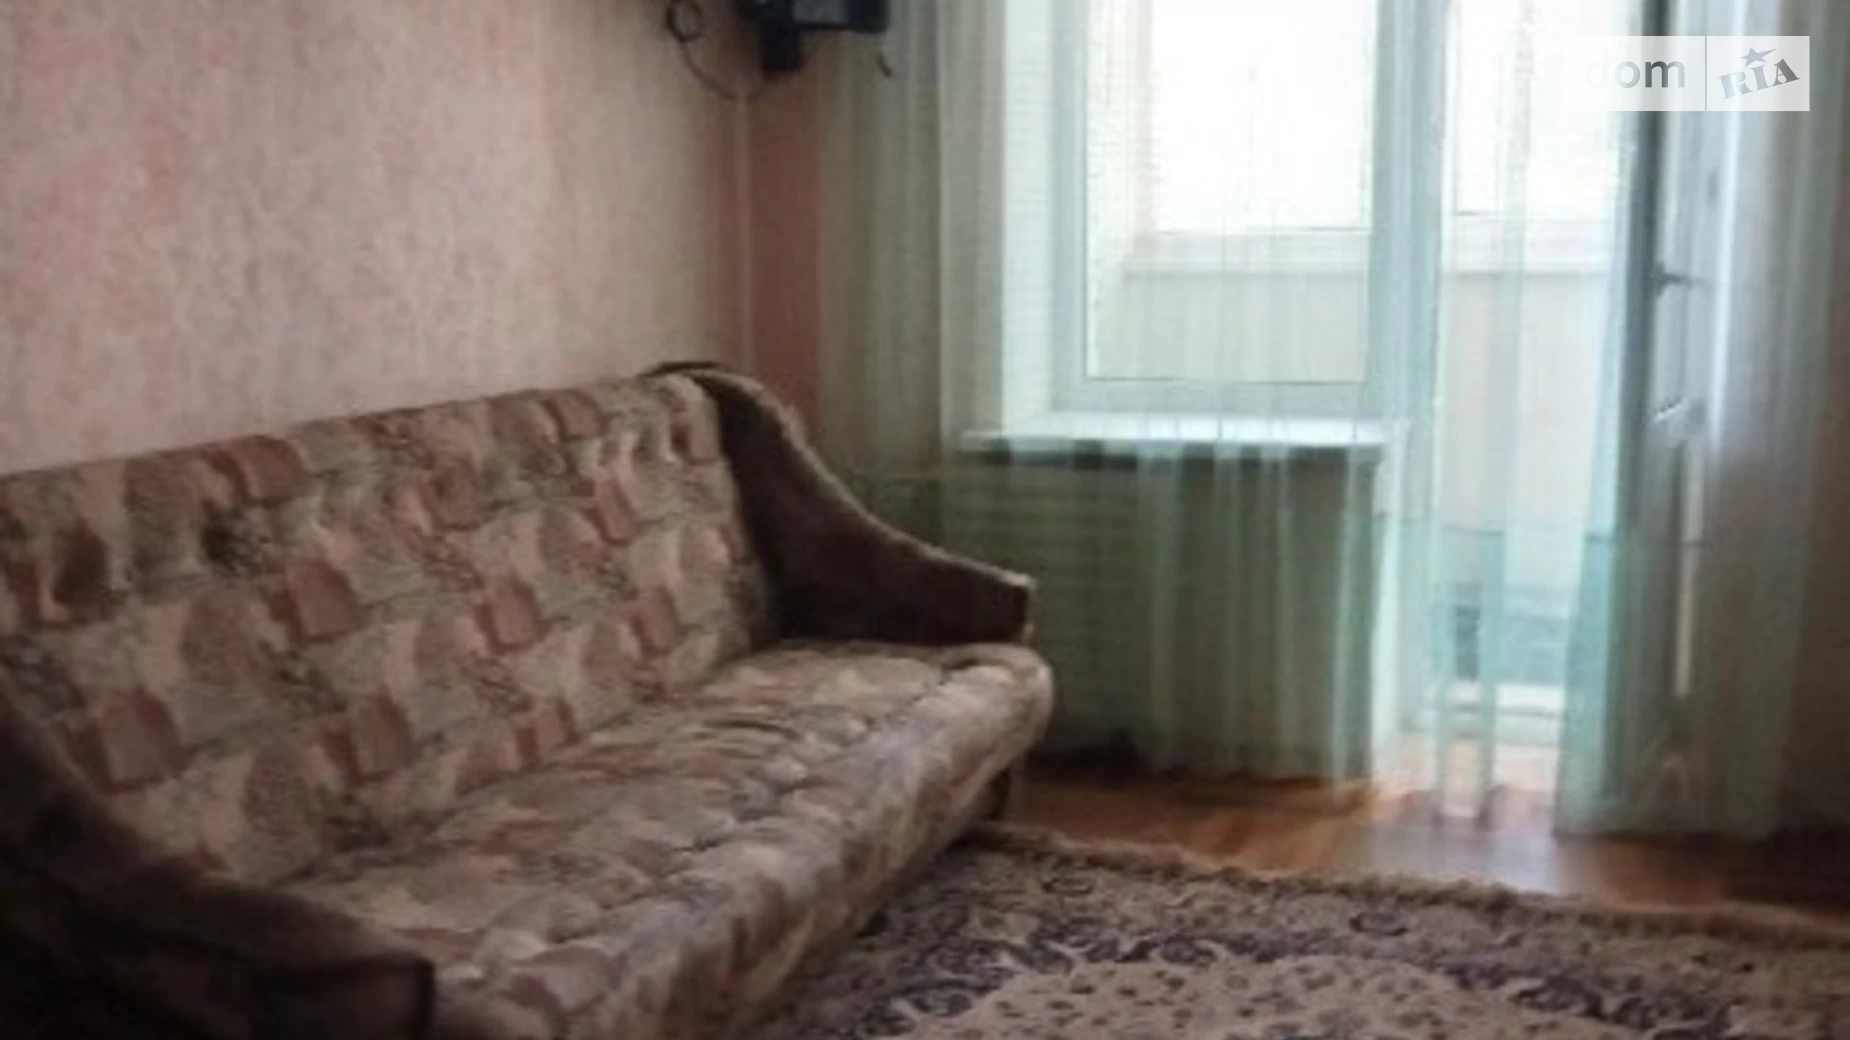 2-комнатная квартира 49.05 кв. м в Запорожье, ул. Ладожская, 8 - фото 4